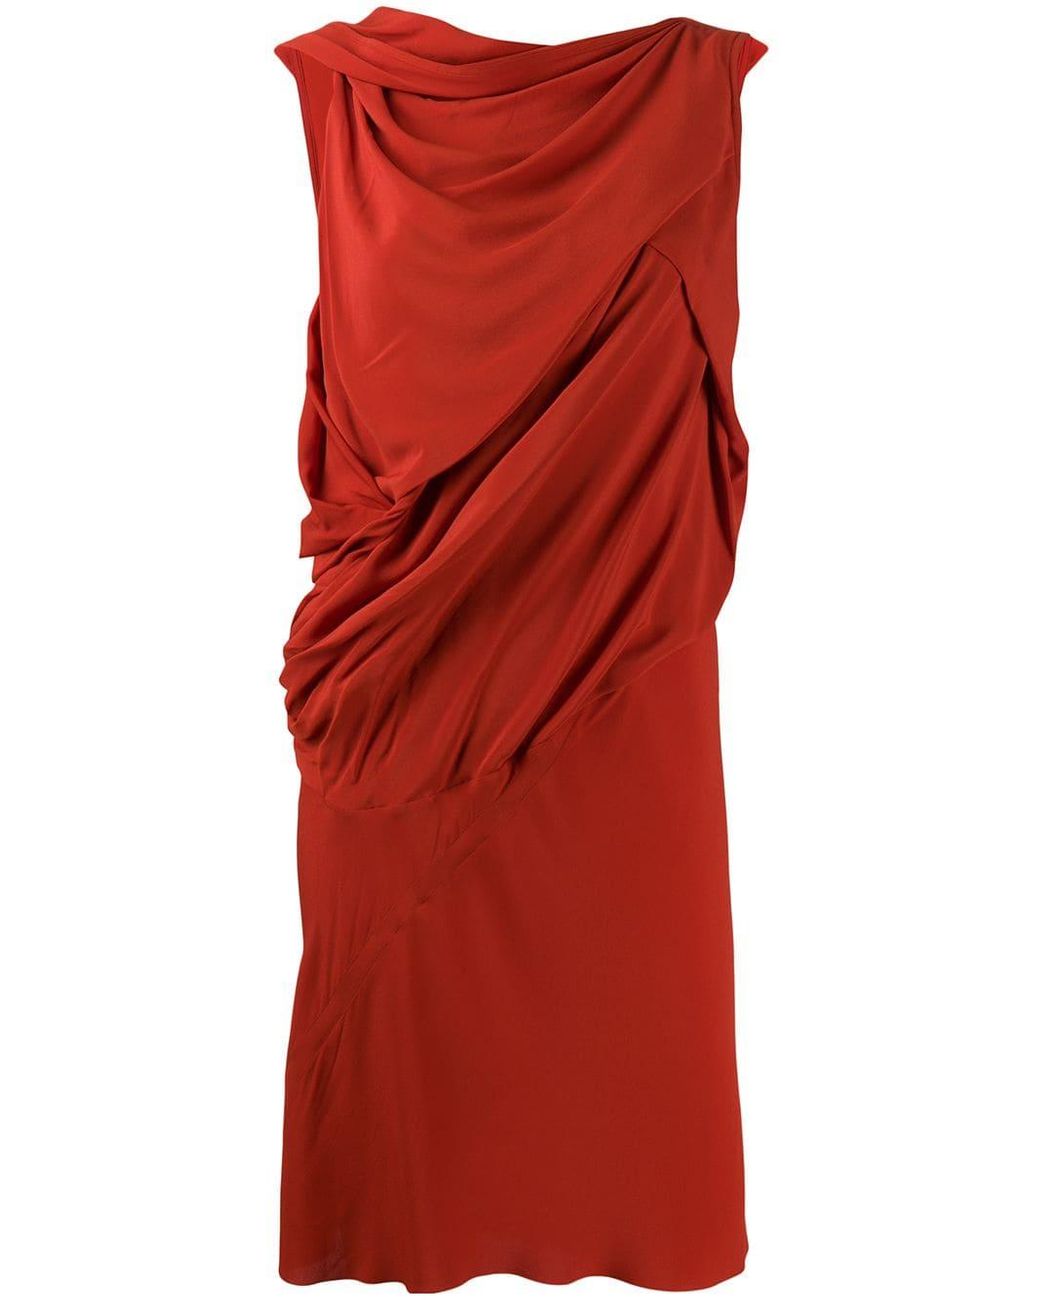 Rick Owens Asymmetric Shift Dress in Red - Lyst